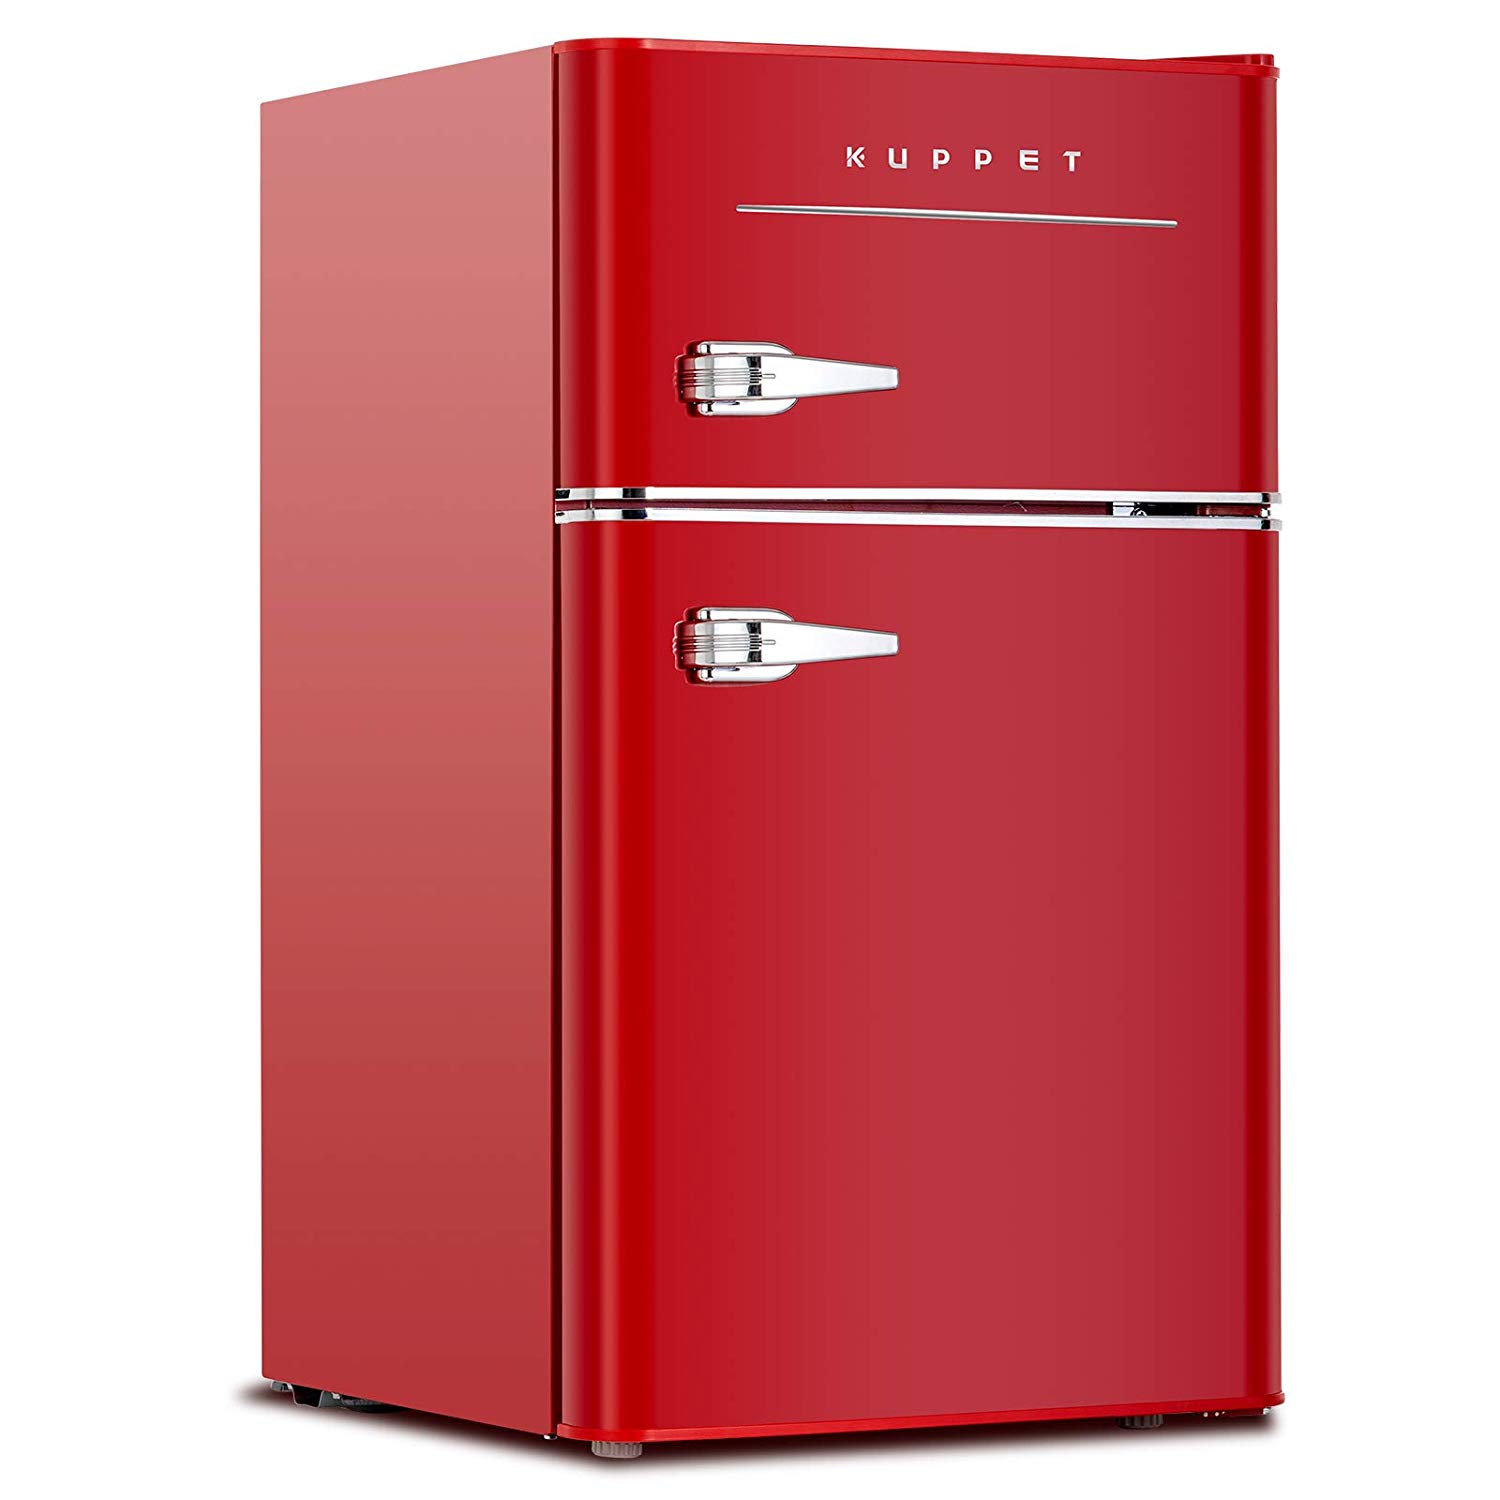 KUPPET Retro Mini Refrigerator 2-Door Compact Refrigerator